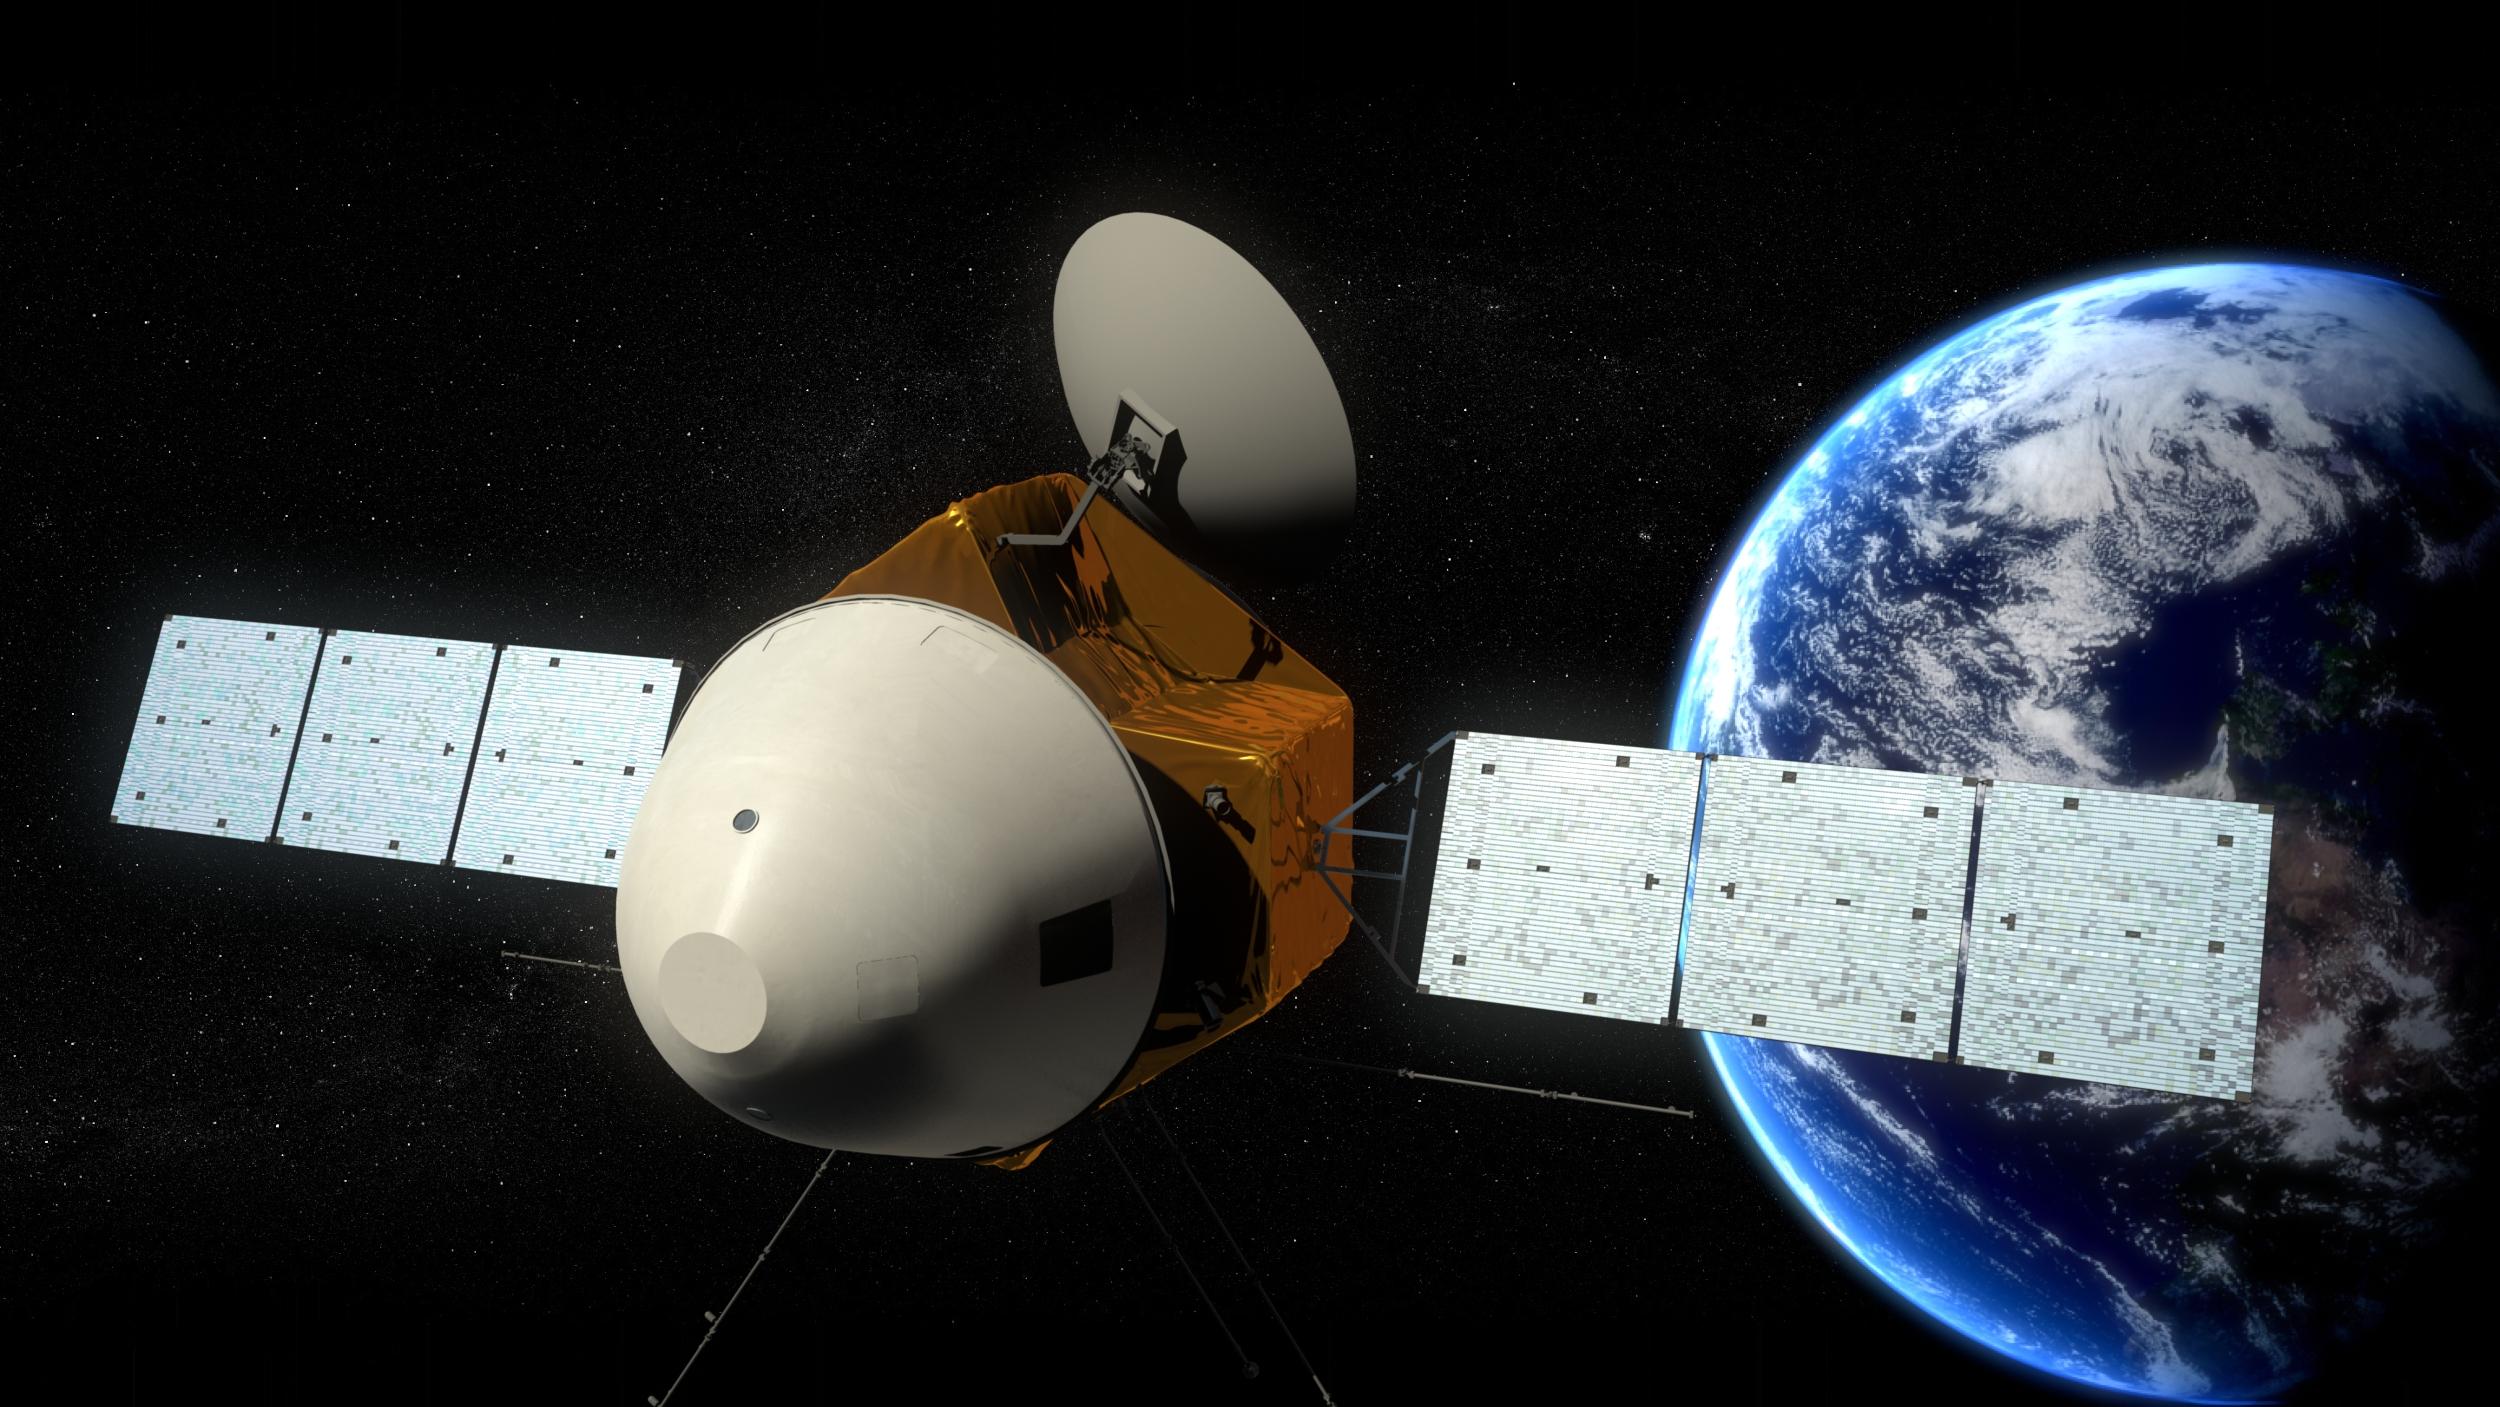 NASA祝贺阿联酋成功发射火星探测器 - 2020年7月20日, 俄罗斯卫星通讯社